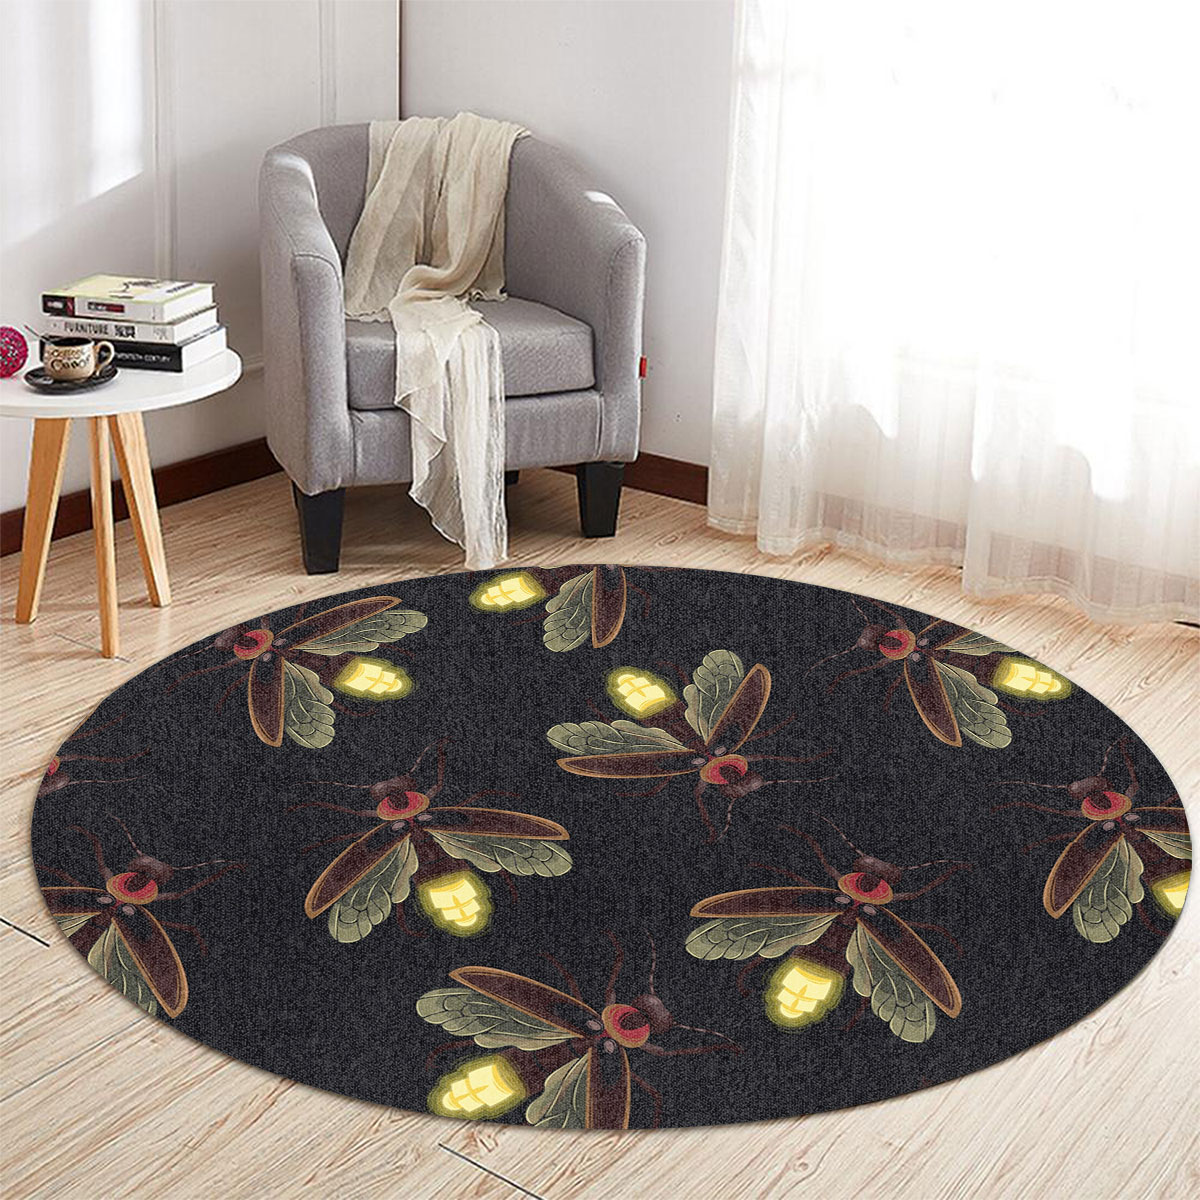 Fireflies Round Carpet